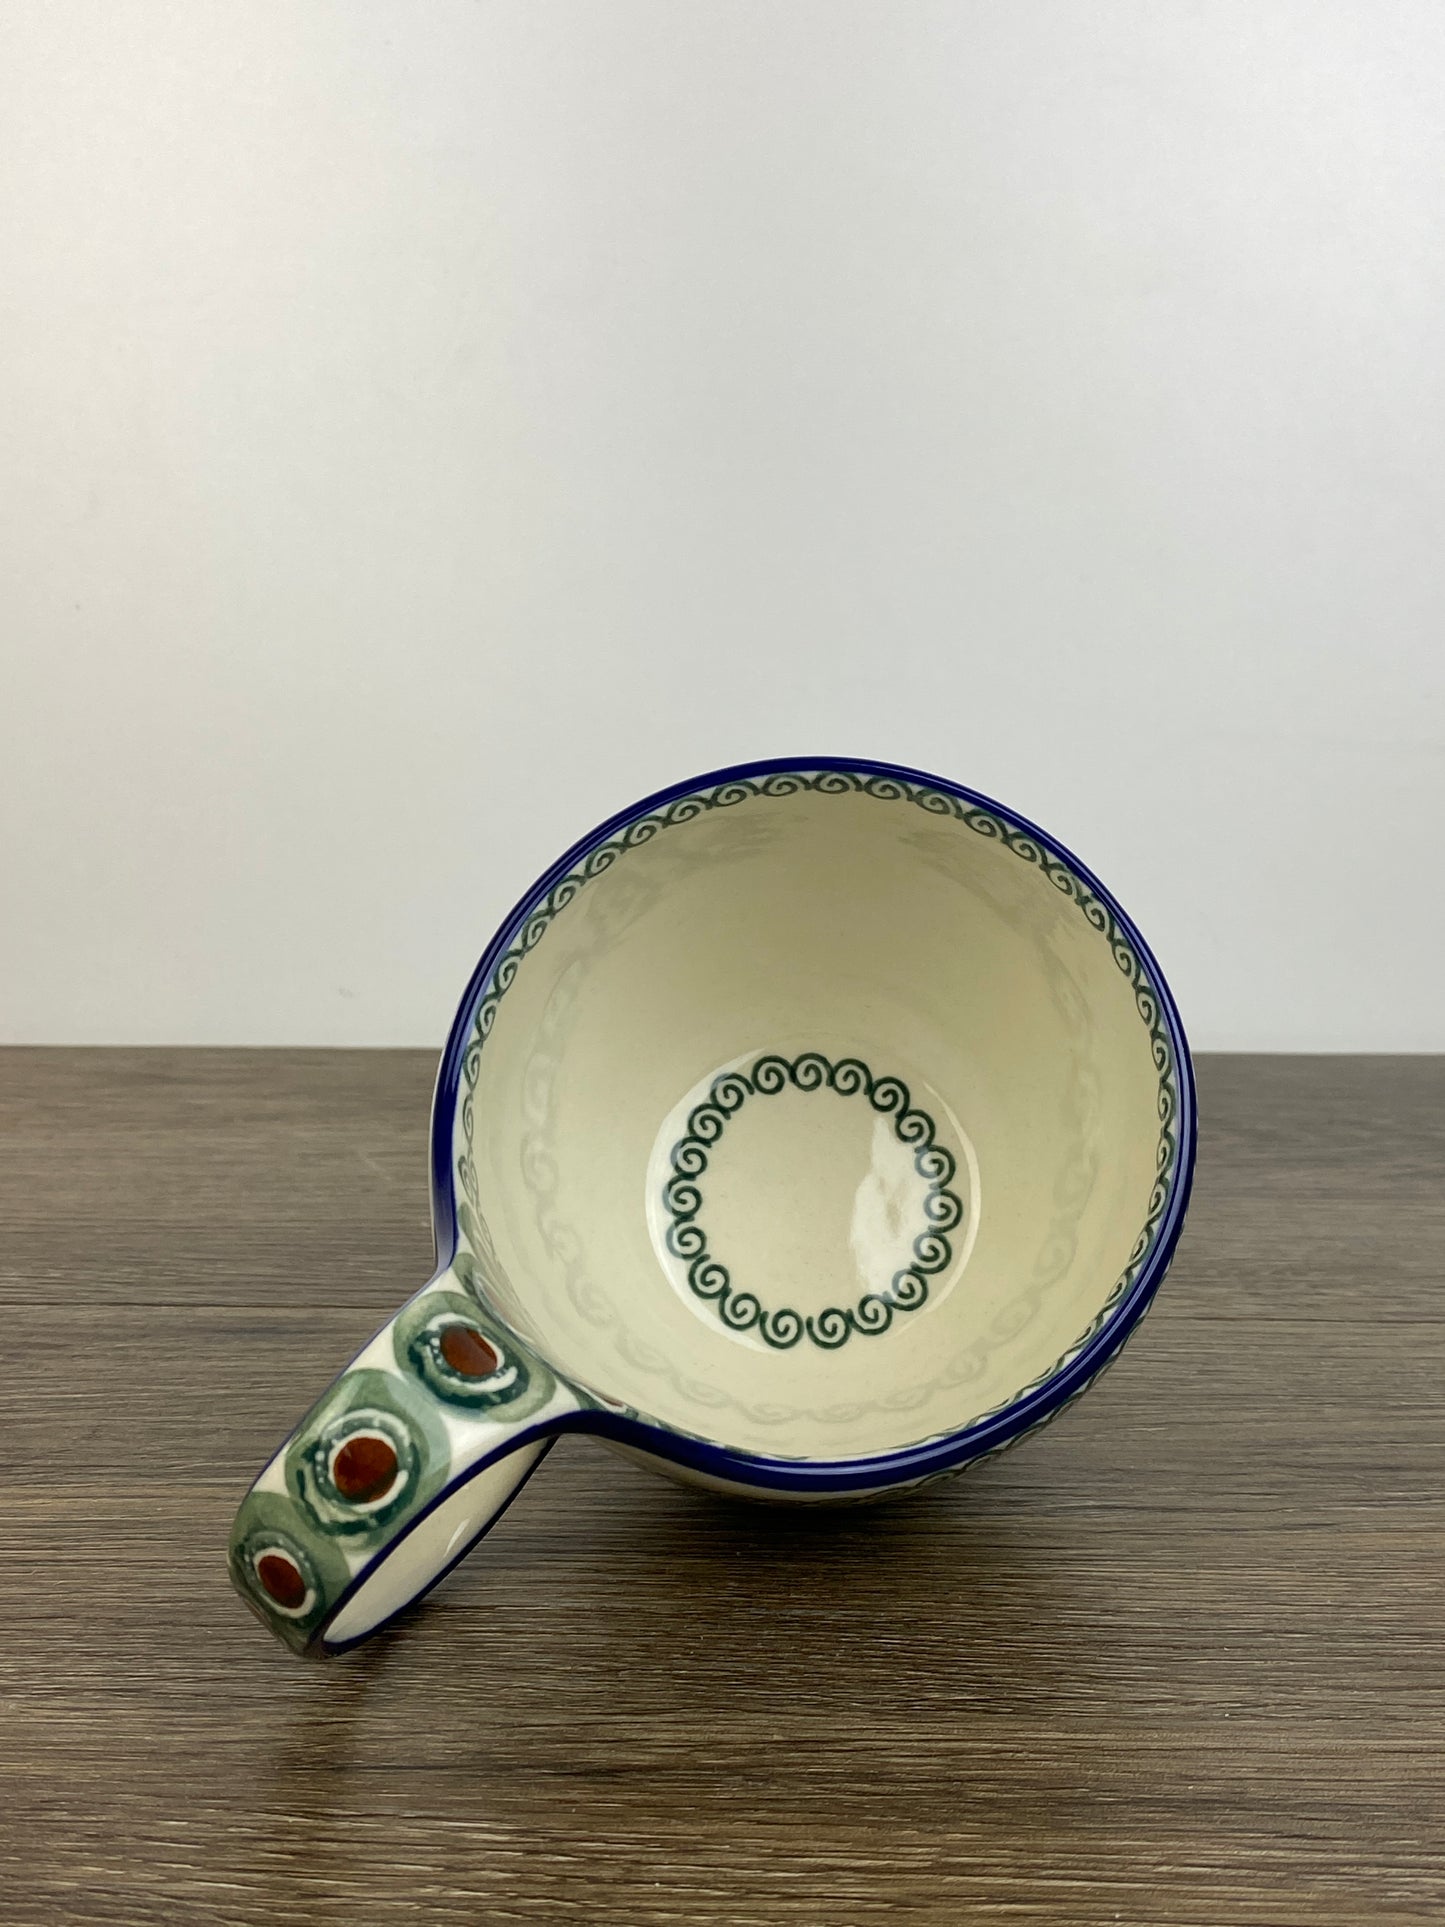 SALE Soup Mug - Shape 845 - Pattern 25